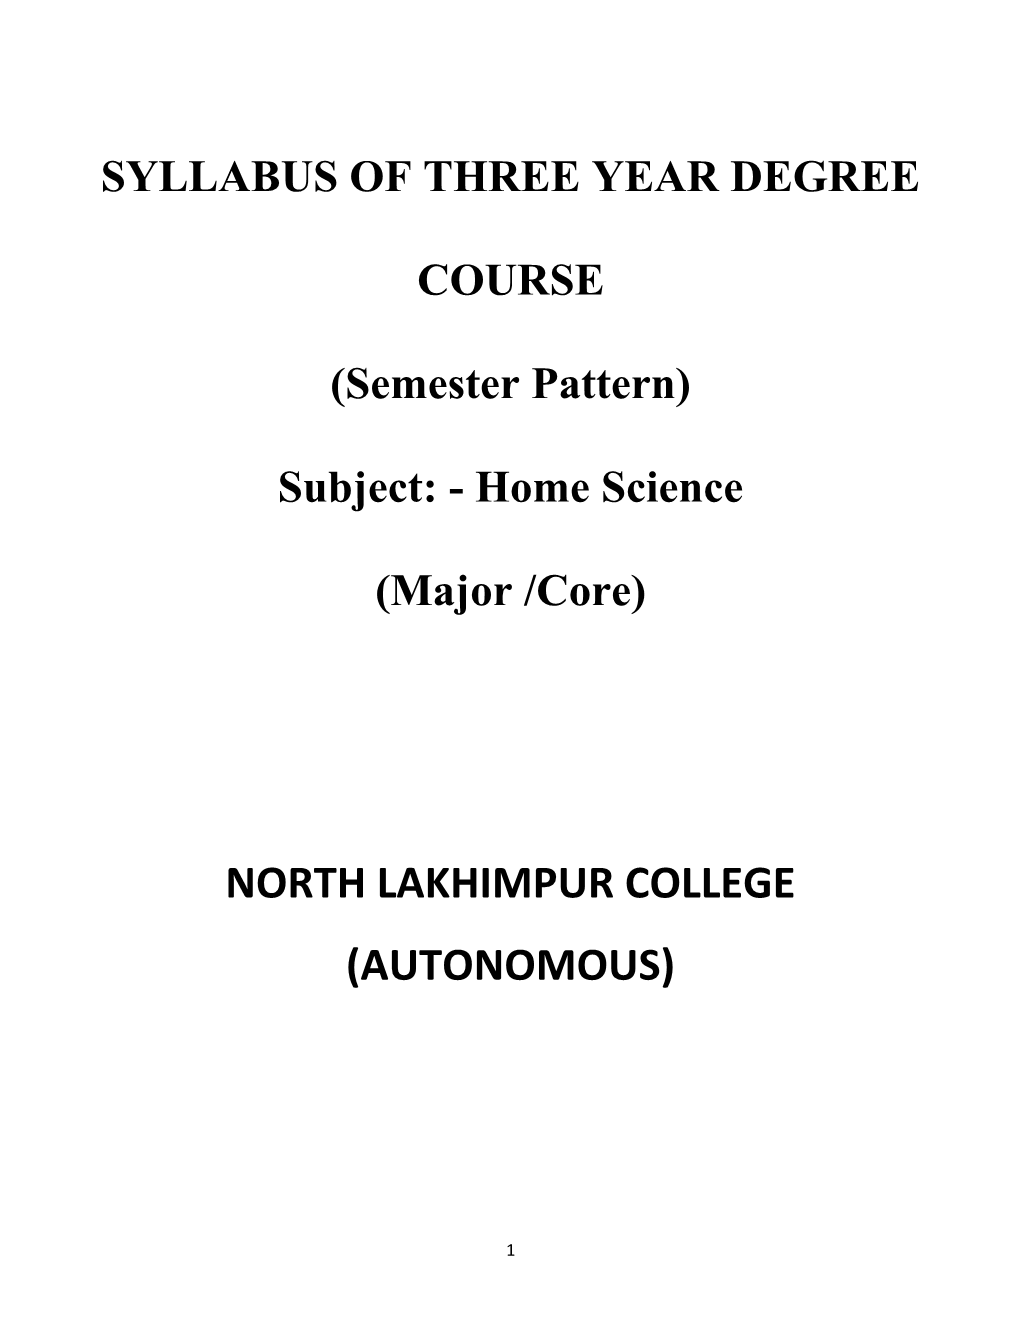 Syllabus of Three Year Degree Course